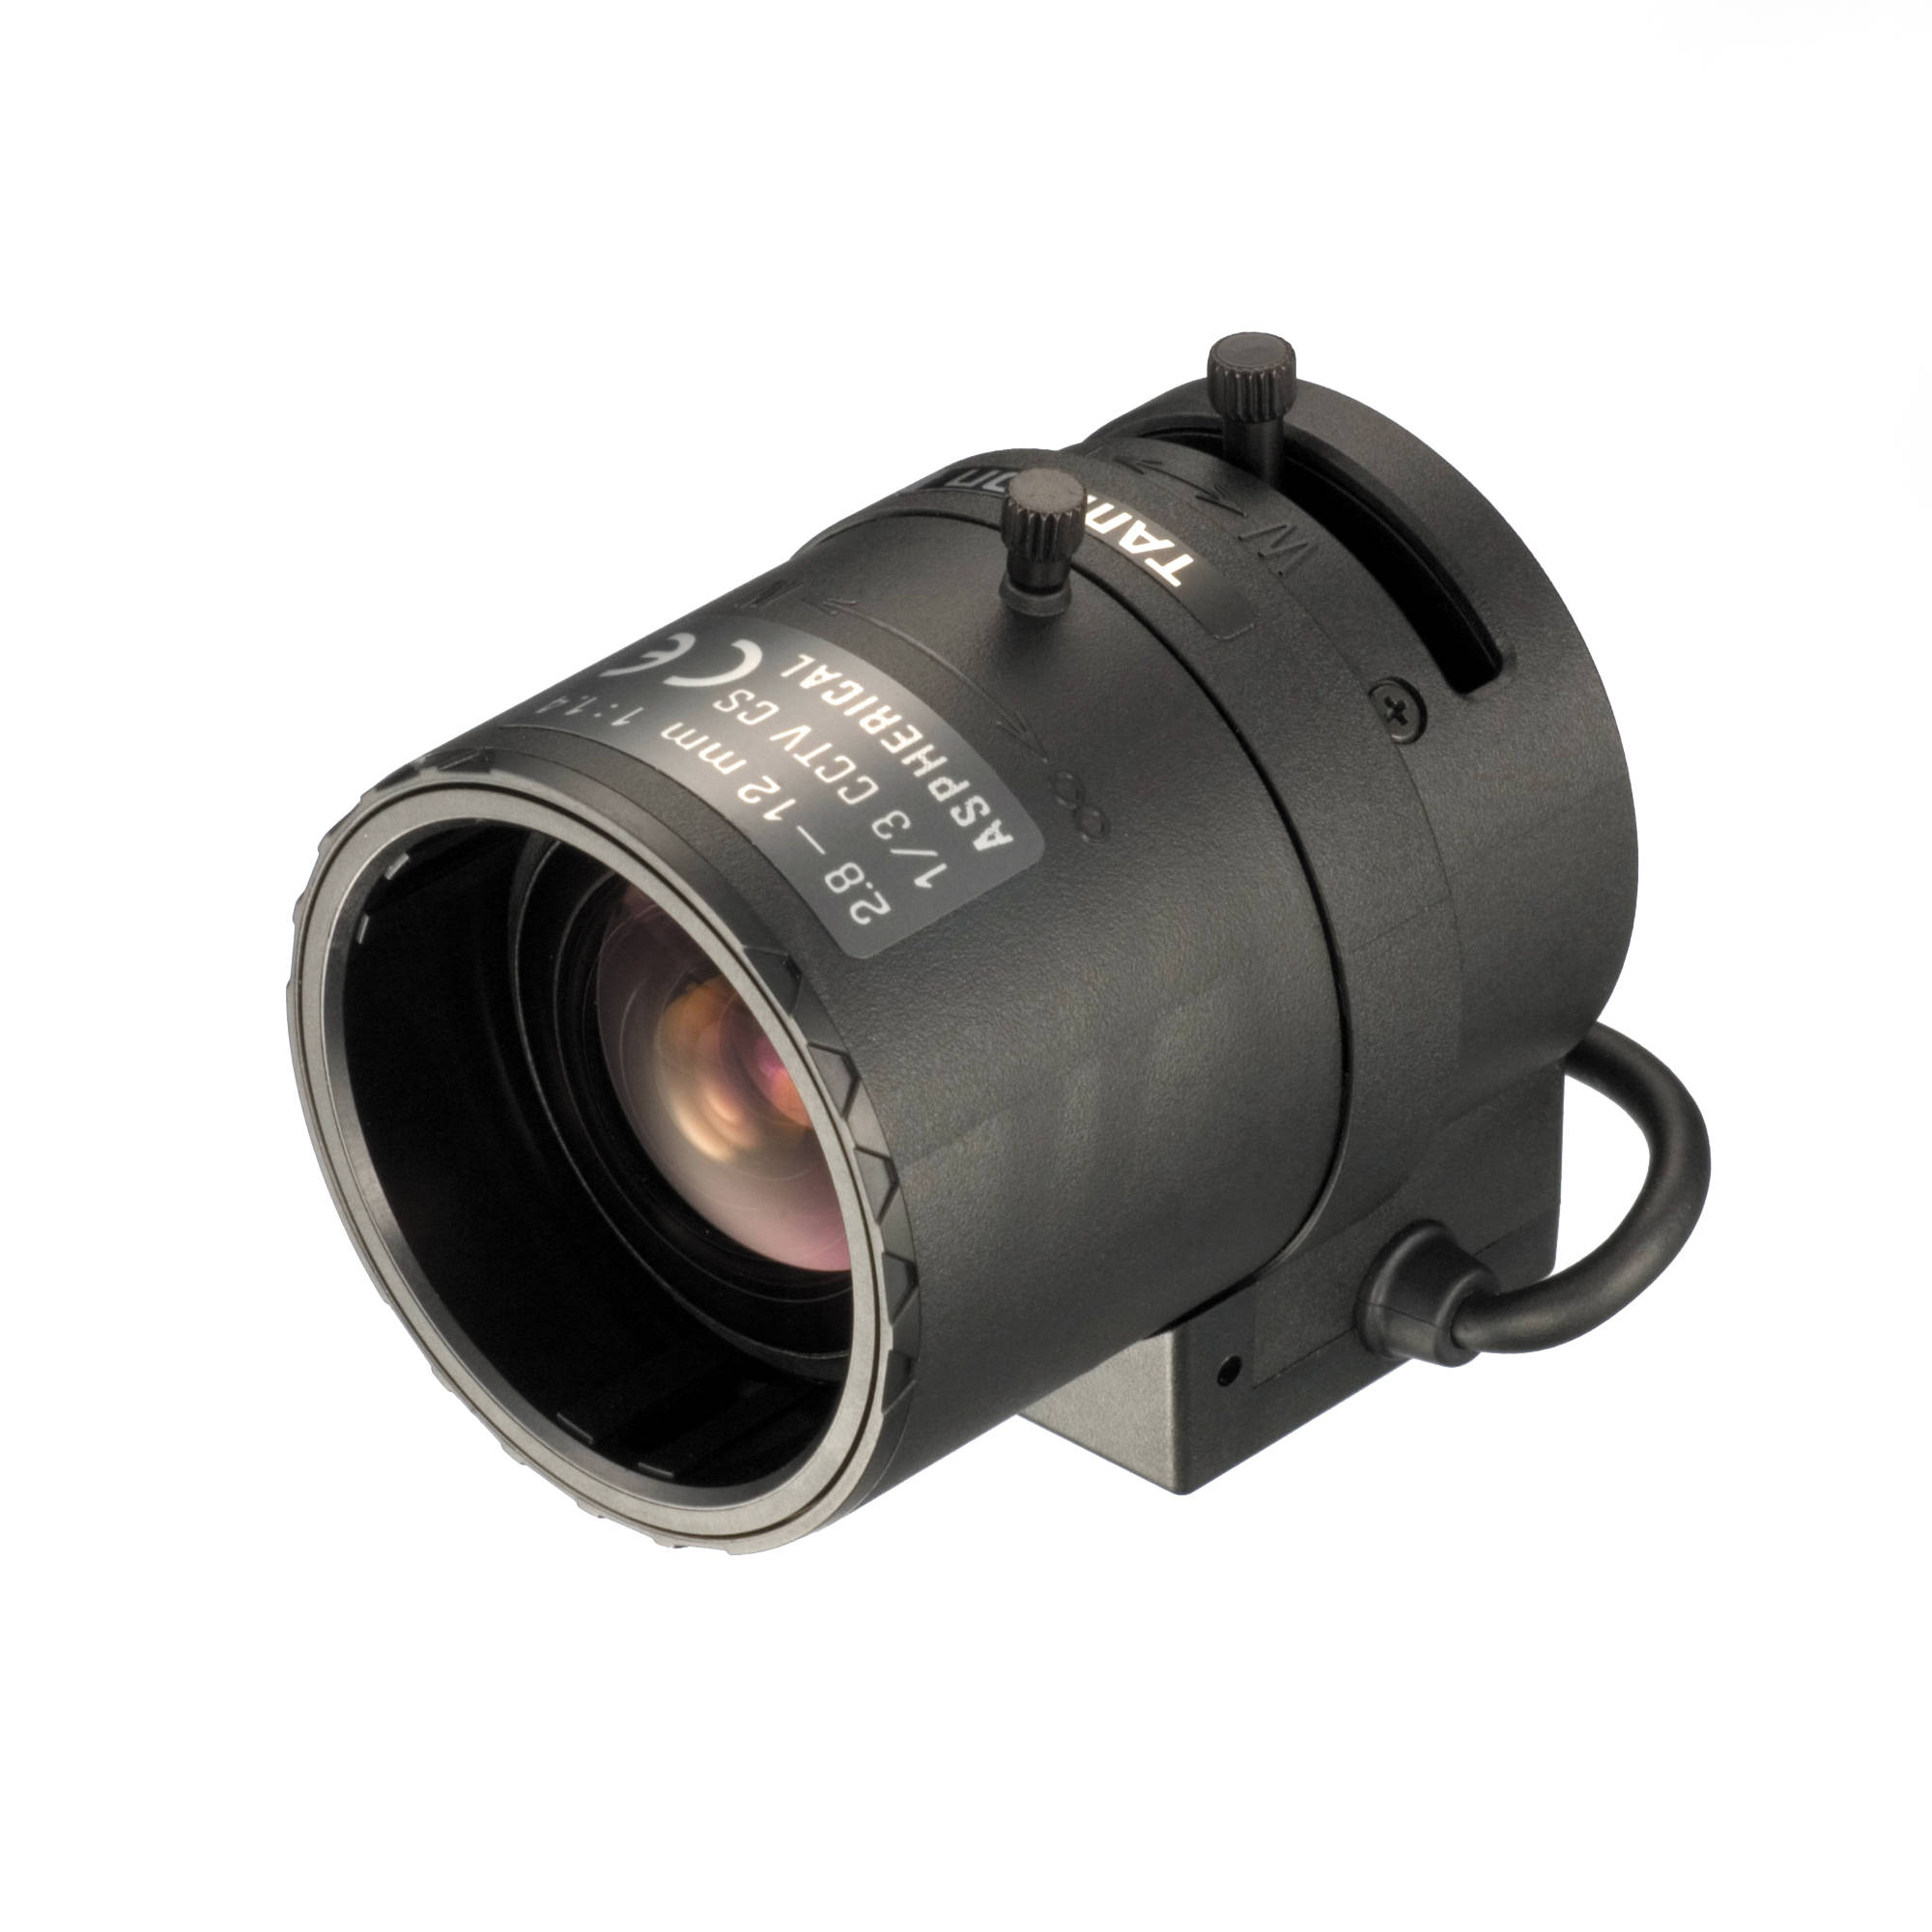 #N//A 2,8 12 Mm 1//2,5IR F1.4 CCTV Video Objektiv Mit Variabler Brennweite F/ür